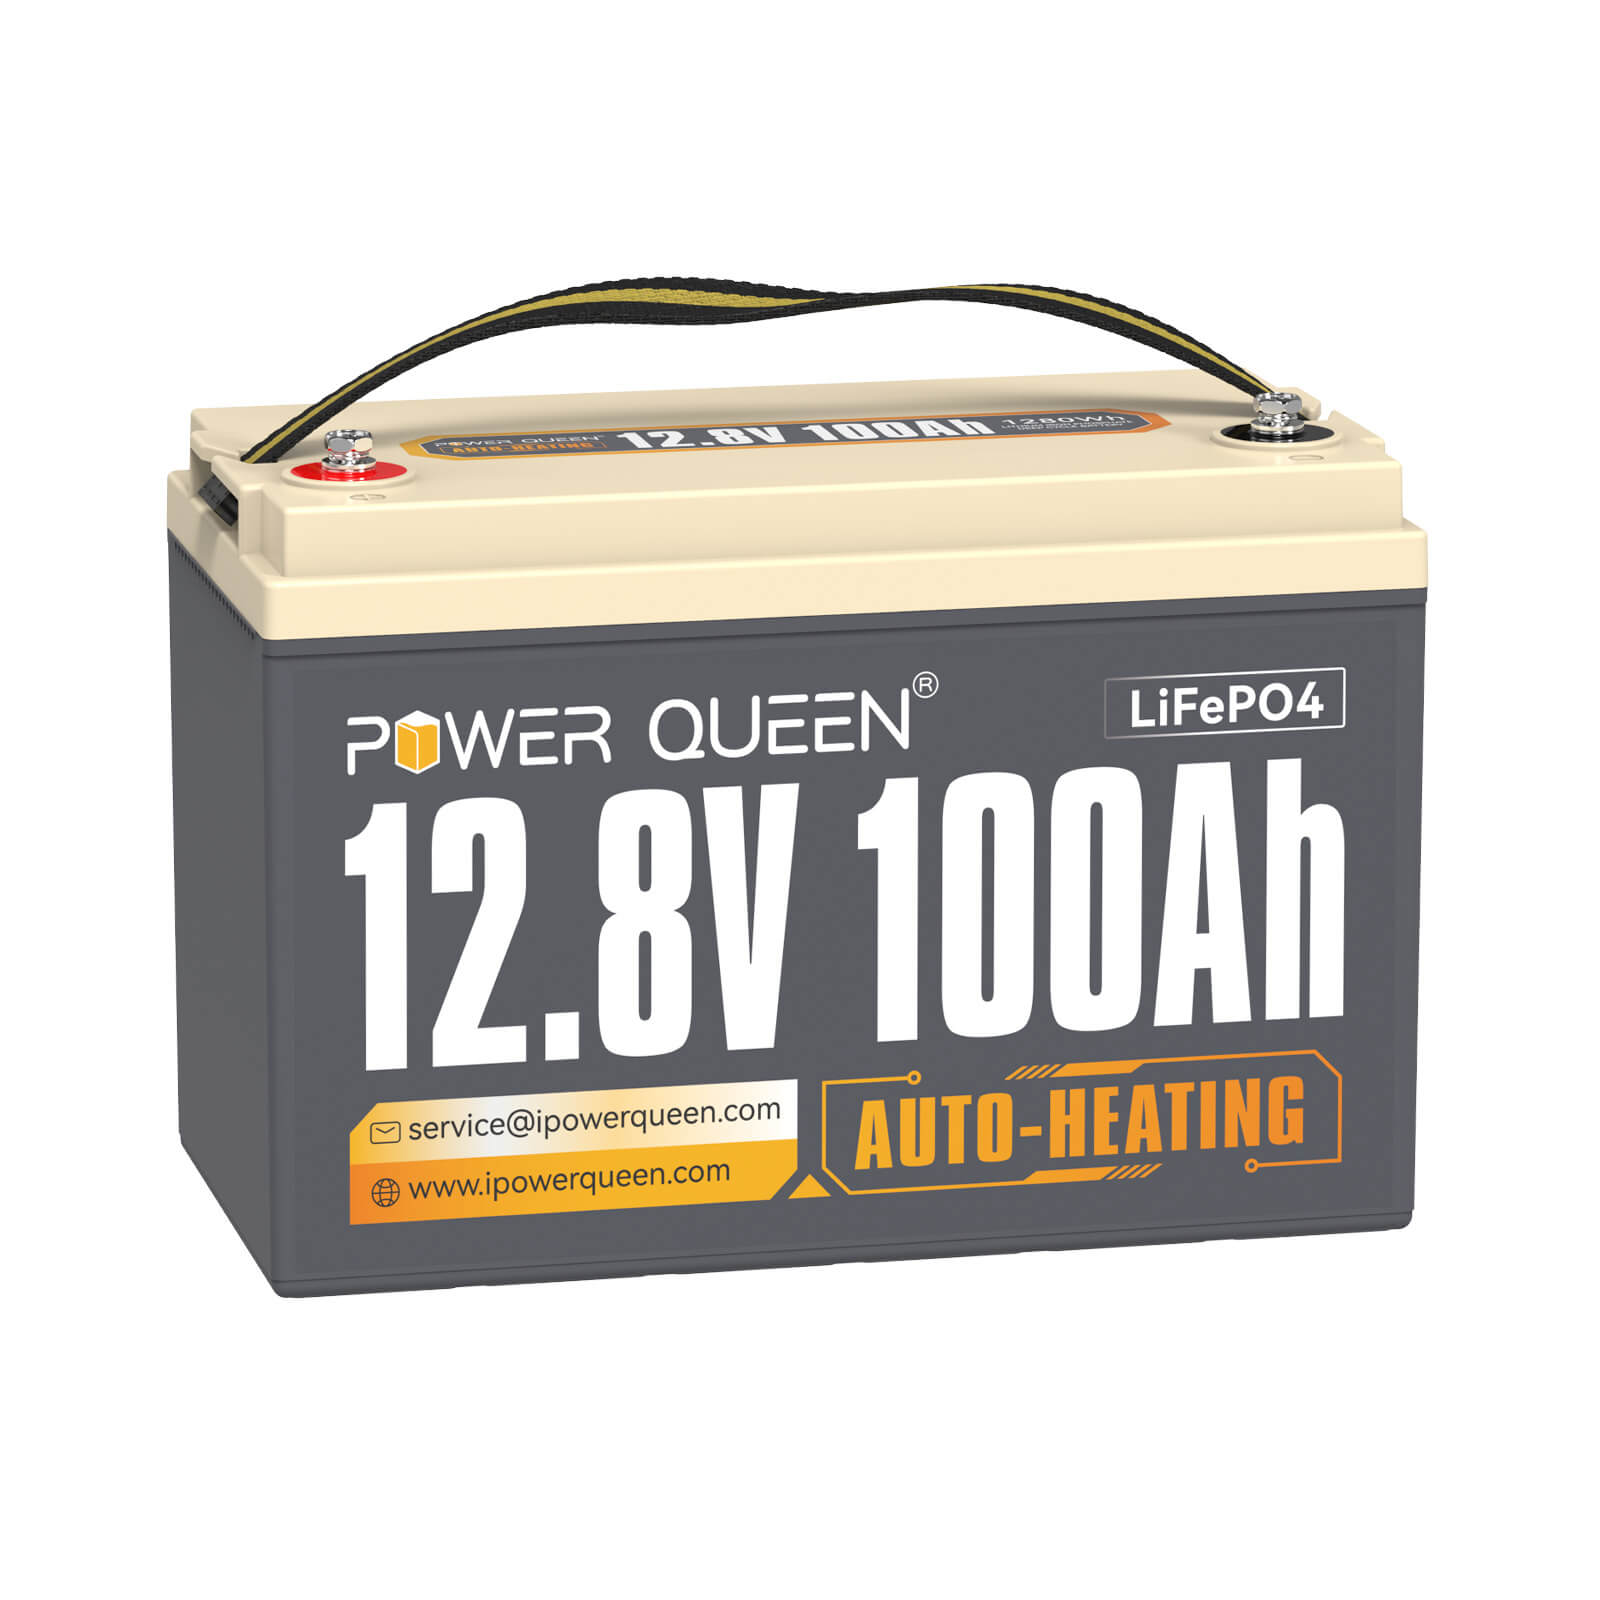 【Like Neu】Power Queen 12,8V 100Ah Selbstheizende LiFePO4-Akku, Eingebautes 100A BMS